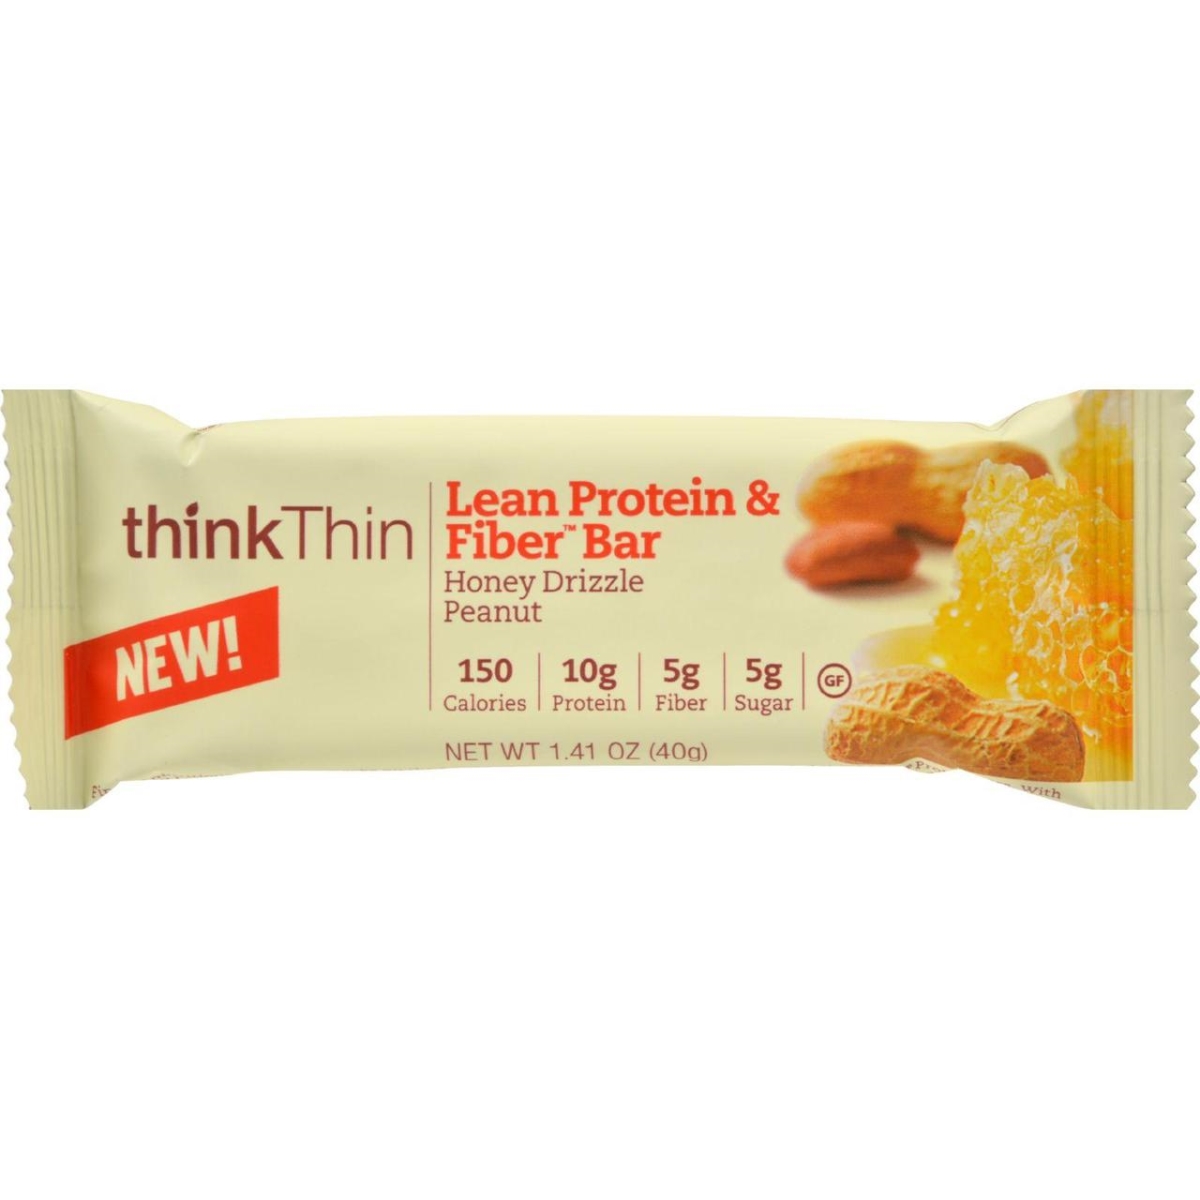 Hg1536838 1.41 Oz Thinkthin Bar Lean Protein Fiber, Honey Peanut